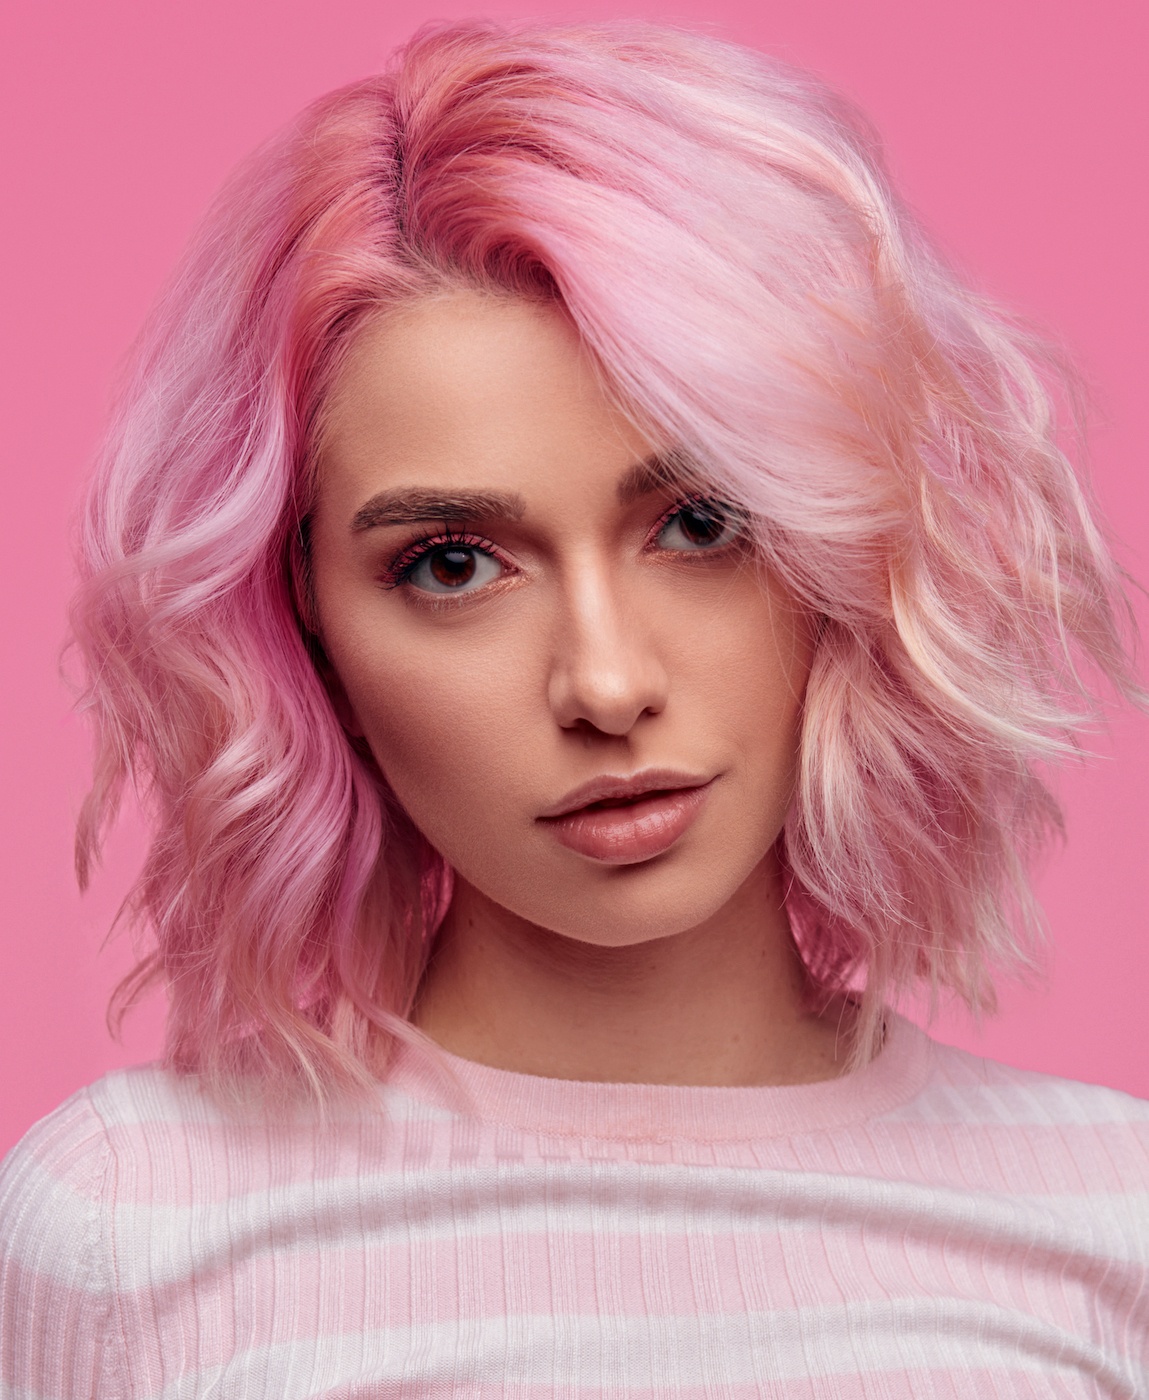 Wanita kaukasia dengan warna rambut pink pastel pada potongan rambut bob